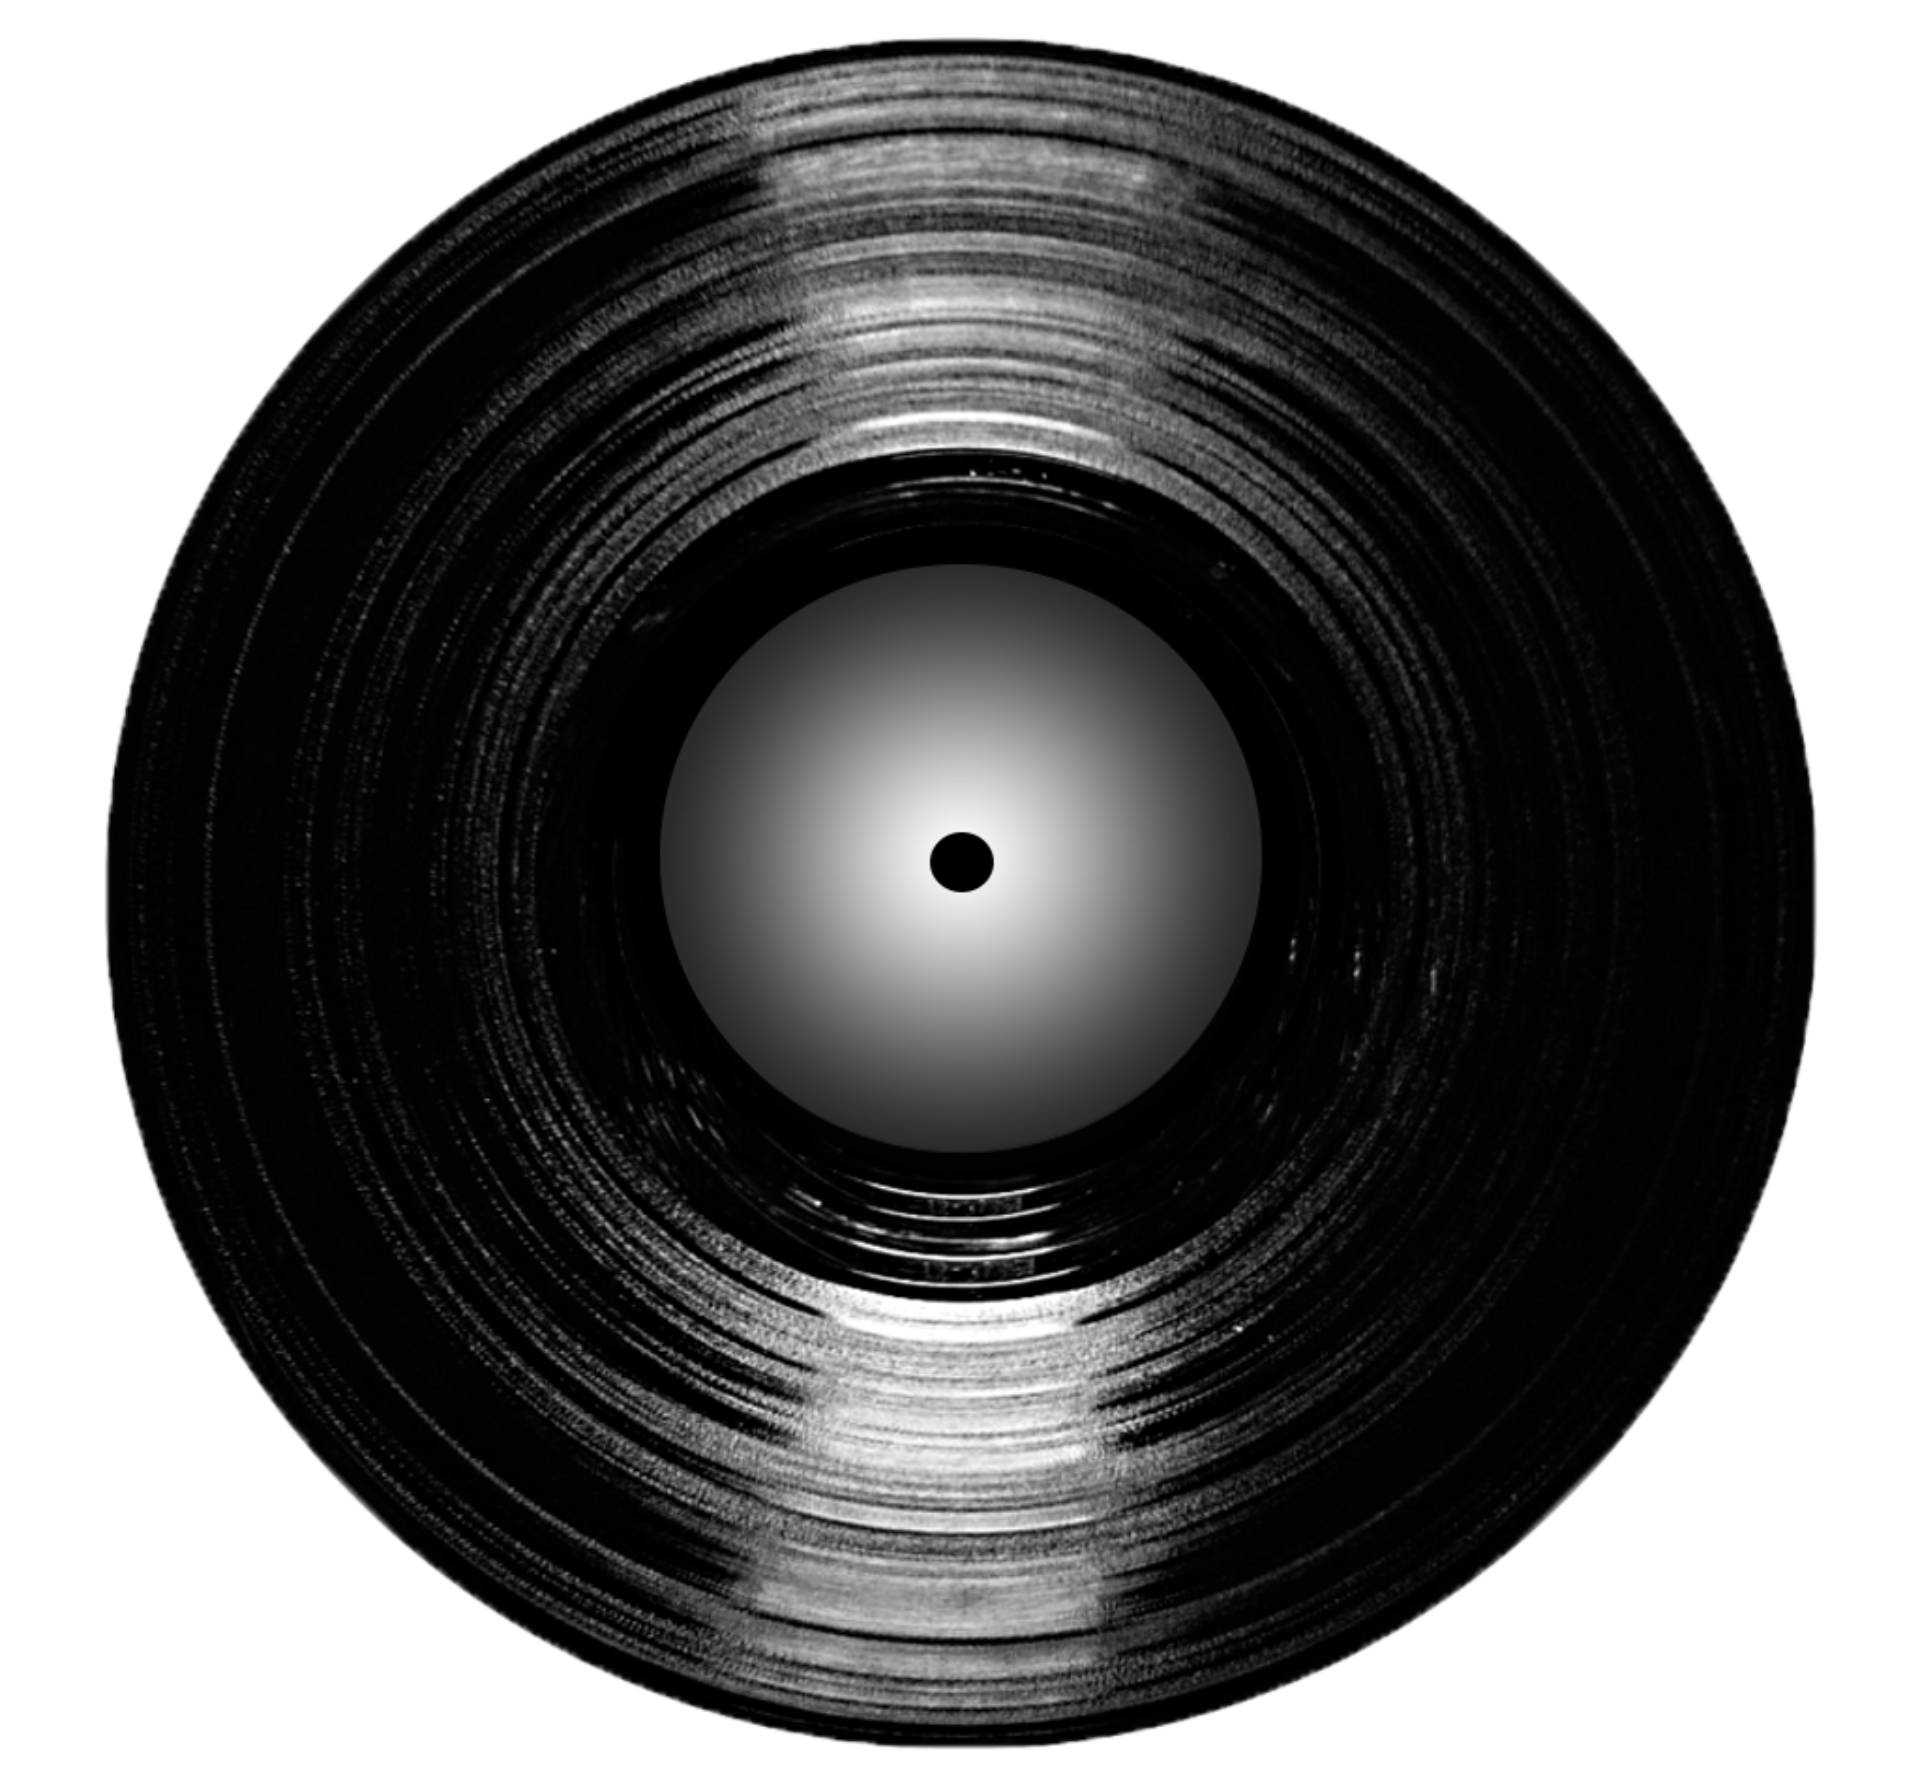 Black Record Vinyl · Free Stock Photo